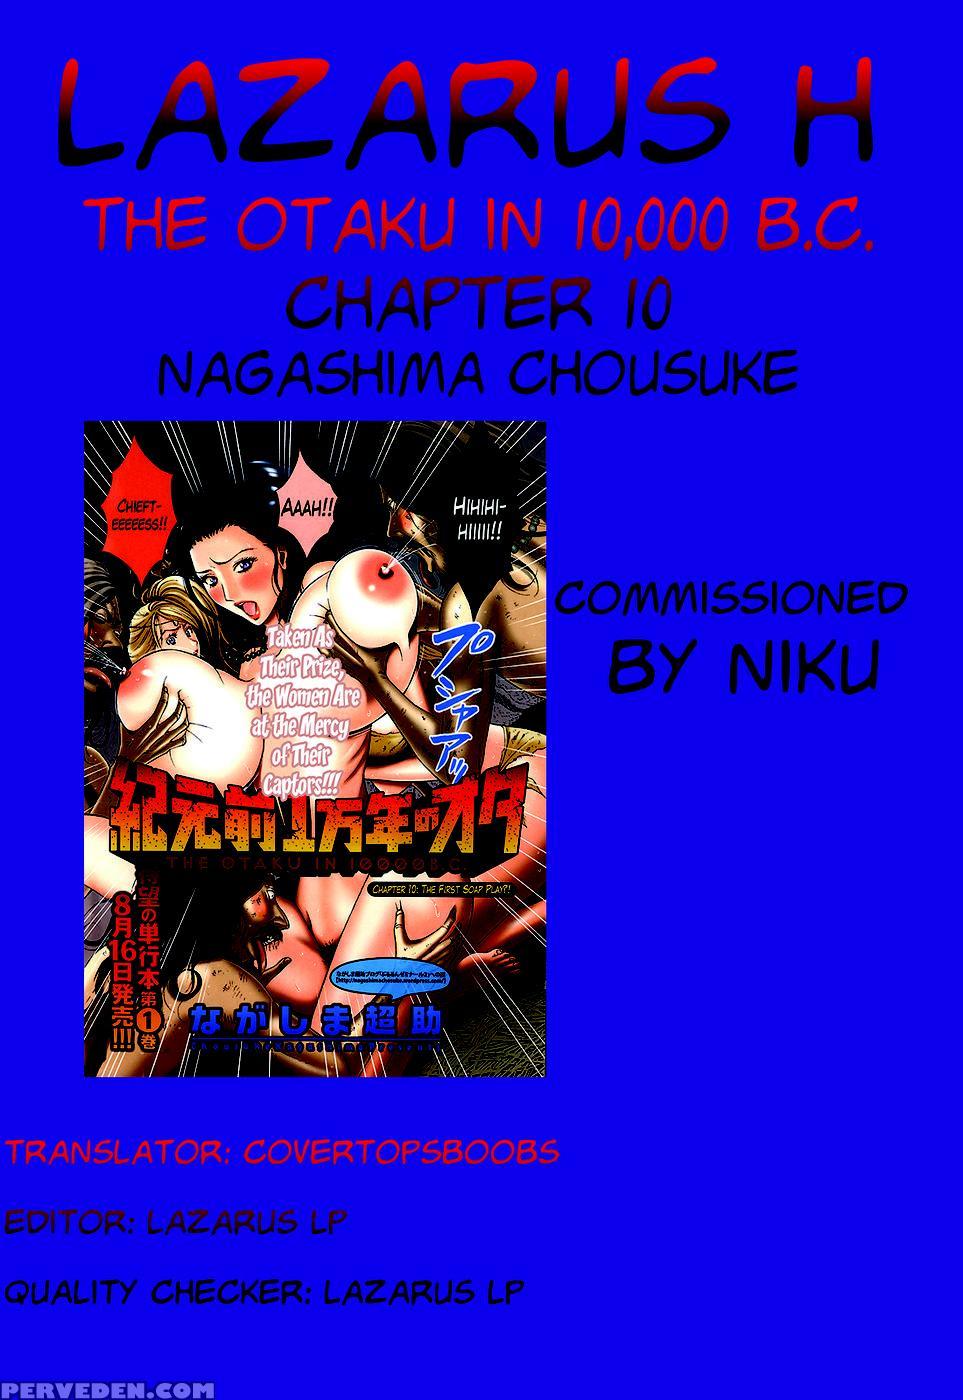 The Otaku In 10,000 B.c. Chapter 10 1